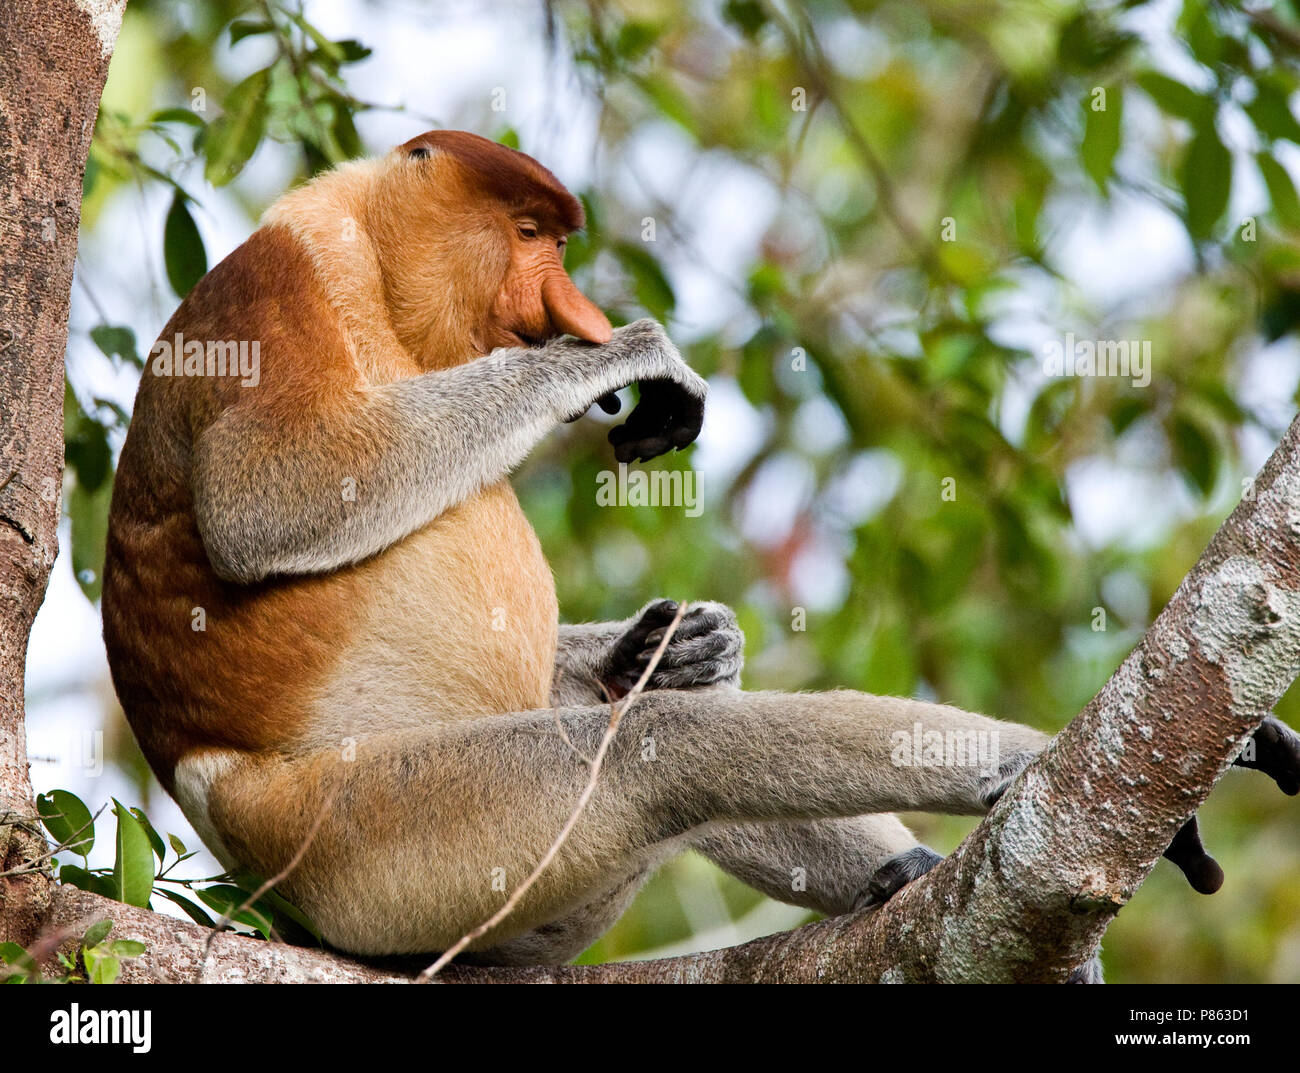 Neusaap mannetje in Boom; Proboscis Monkey Mann im Baum Stockfoto